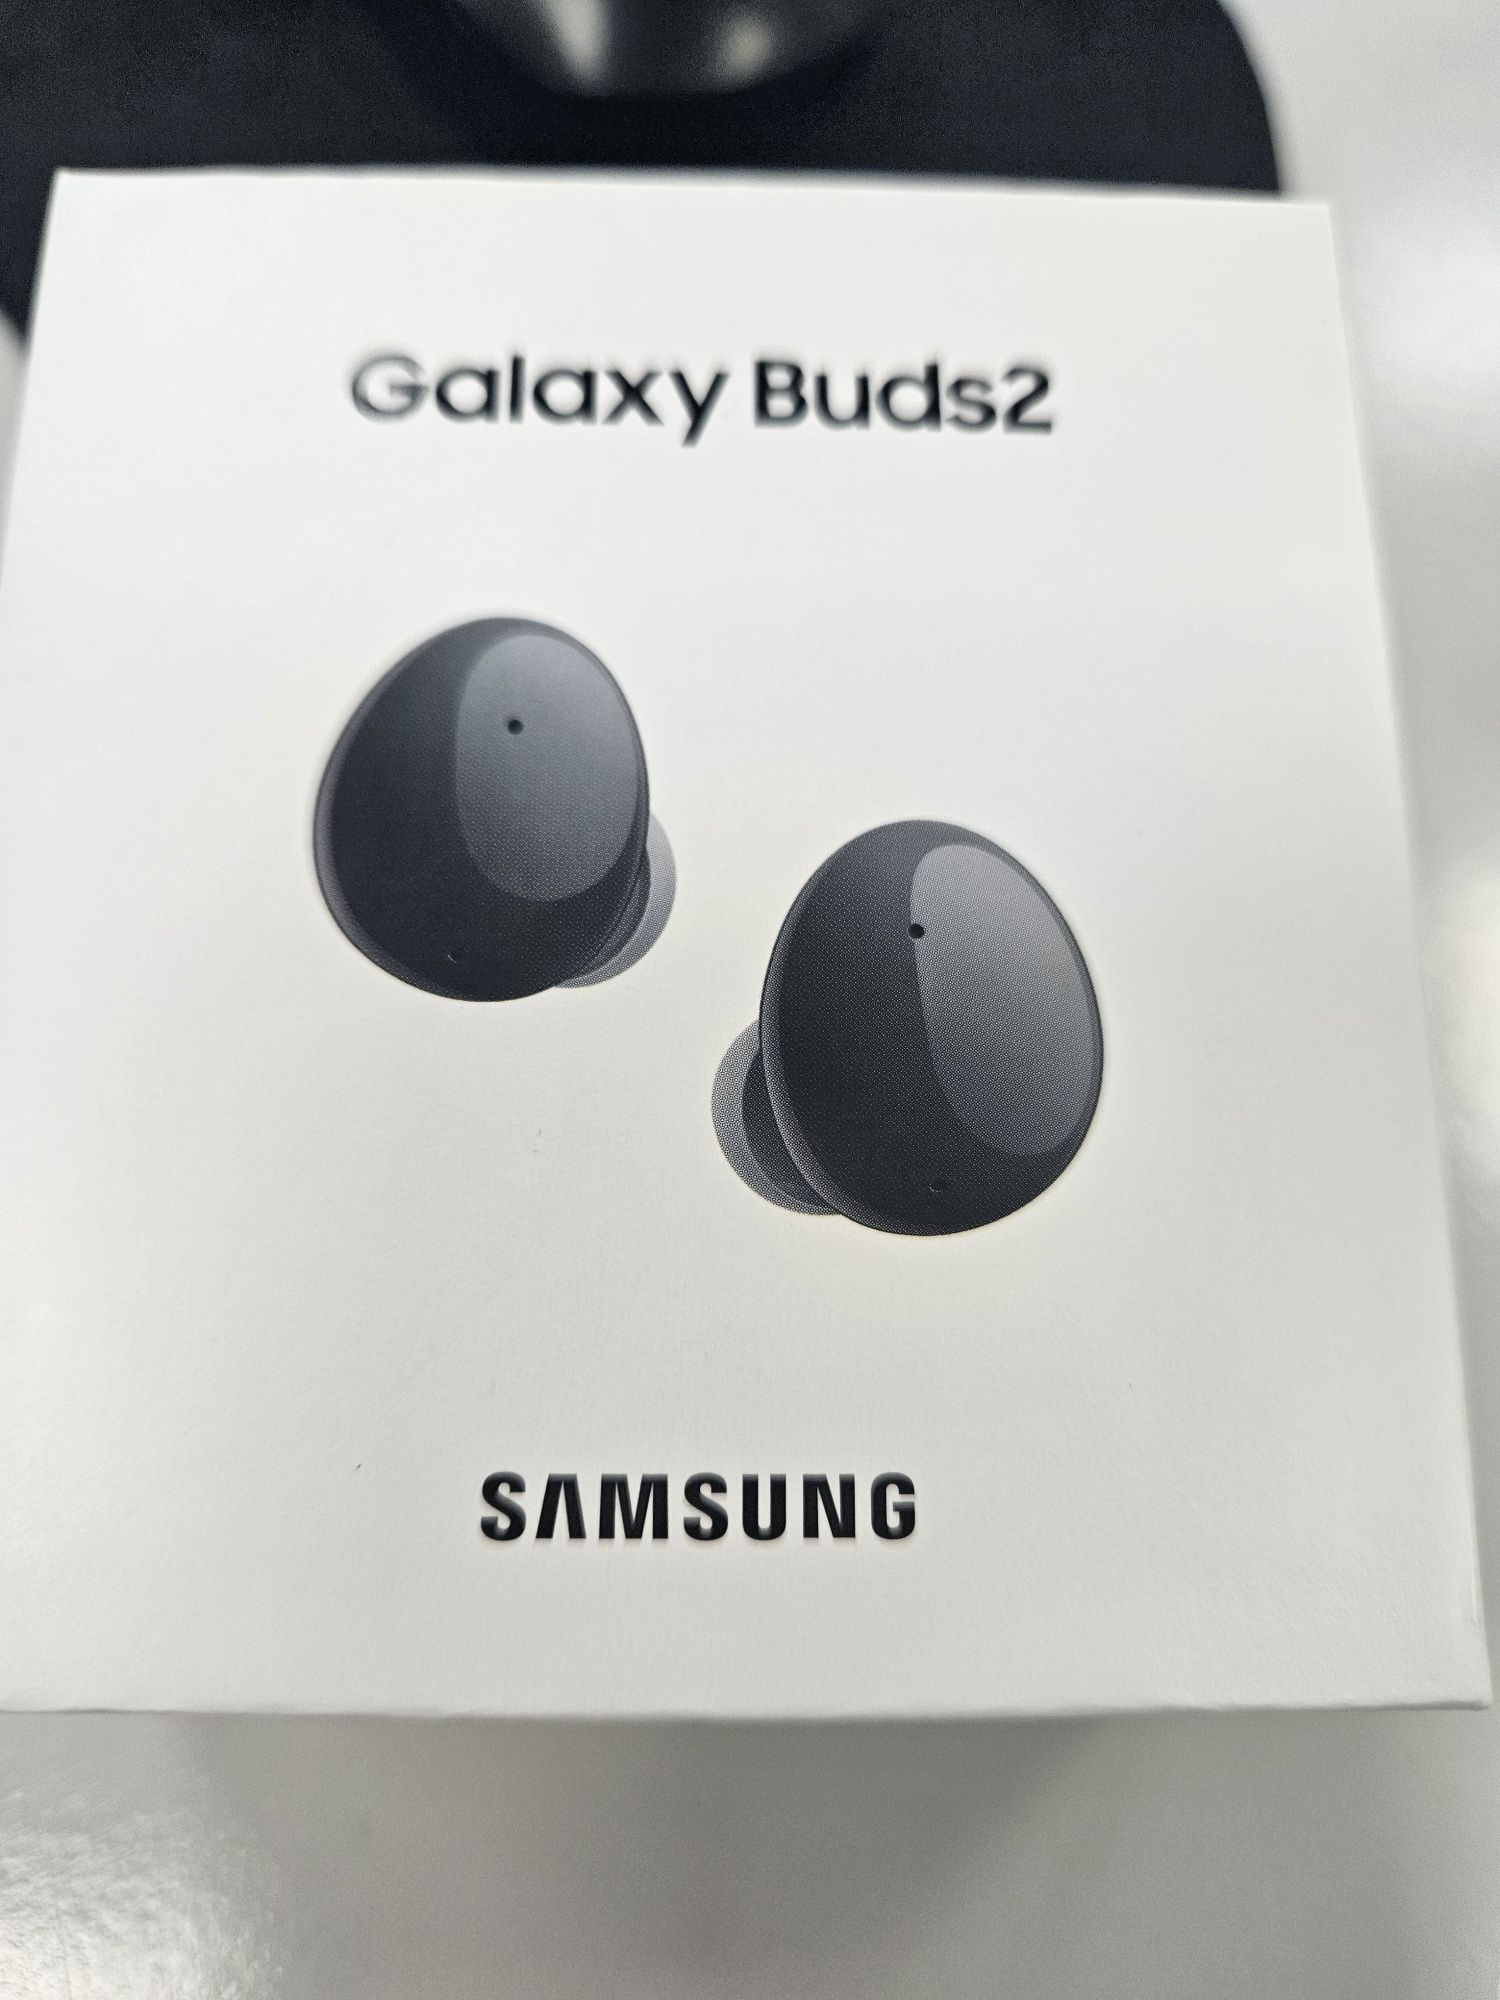 Galaxy Buds2 Samsung